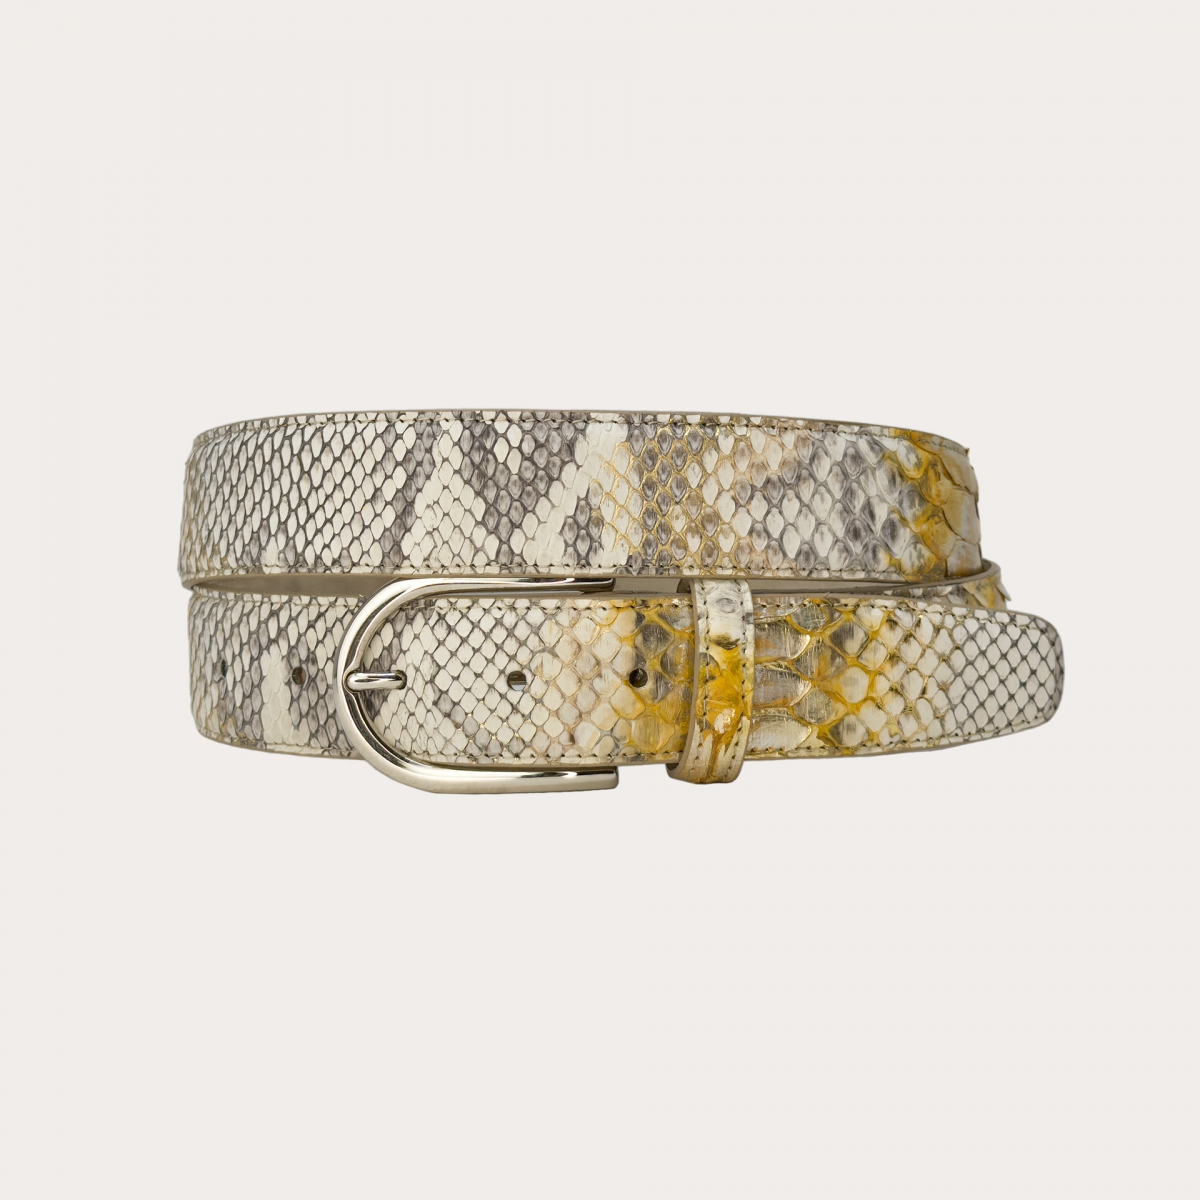 Python belt rock with gold padding